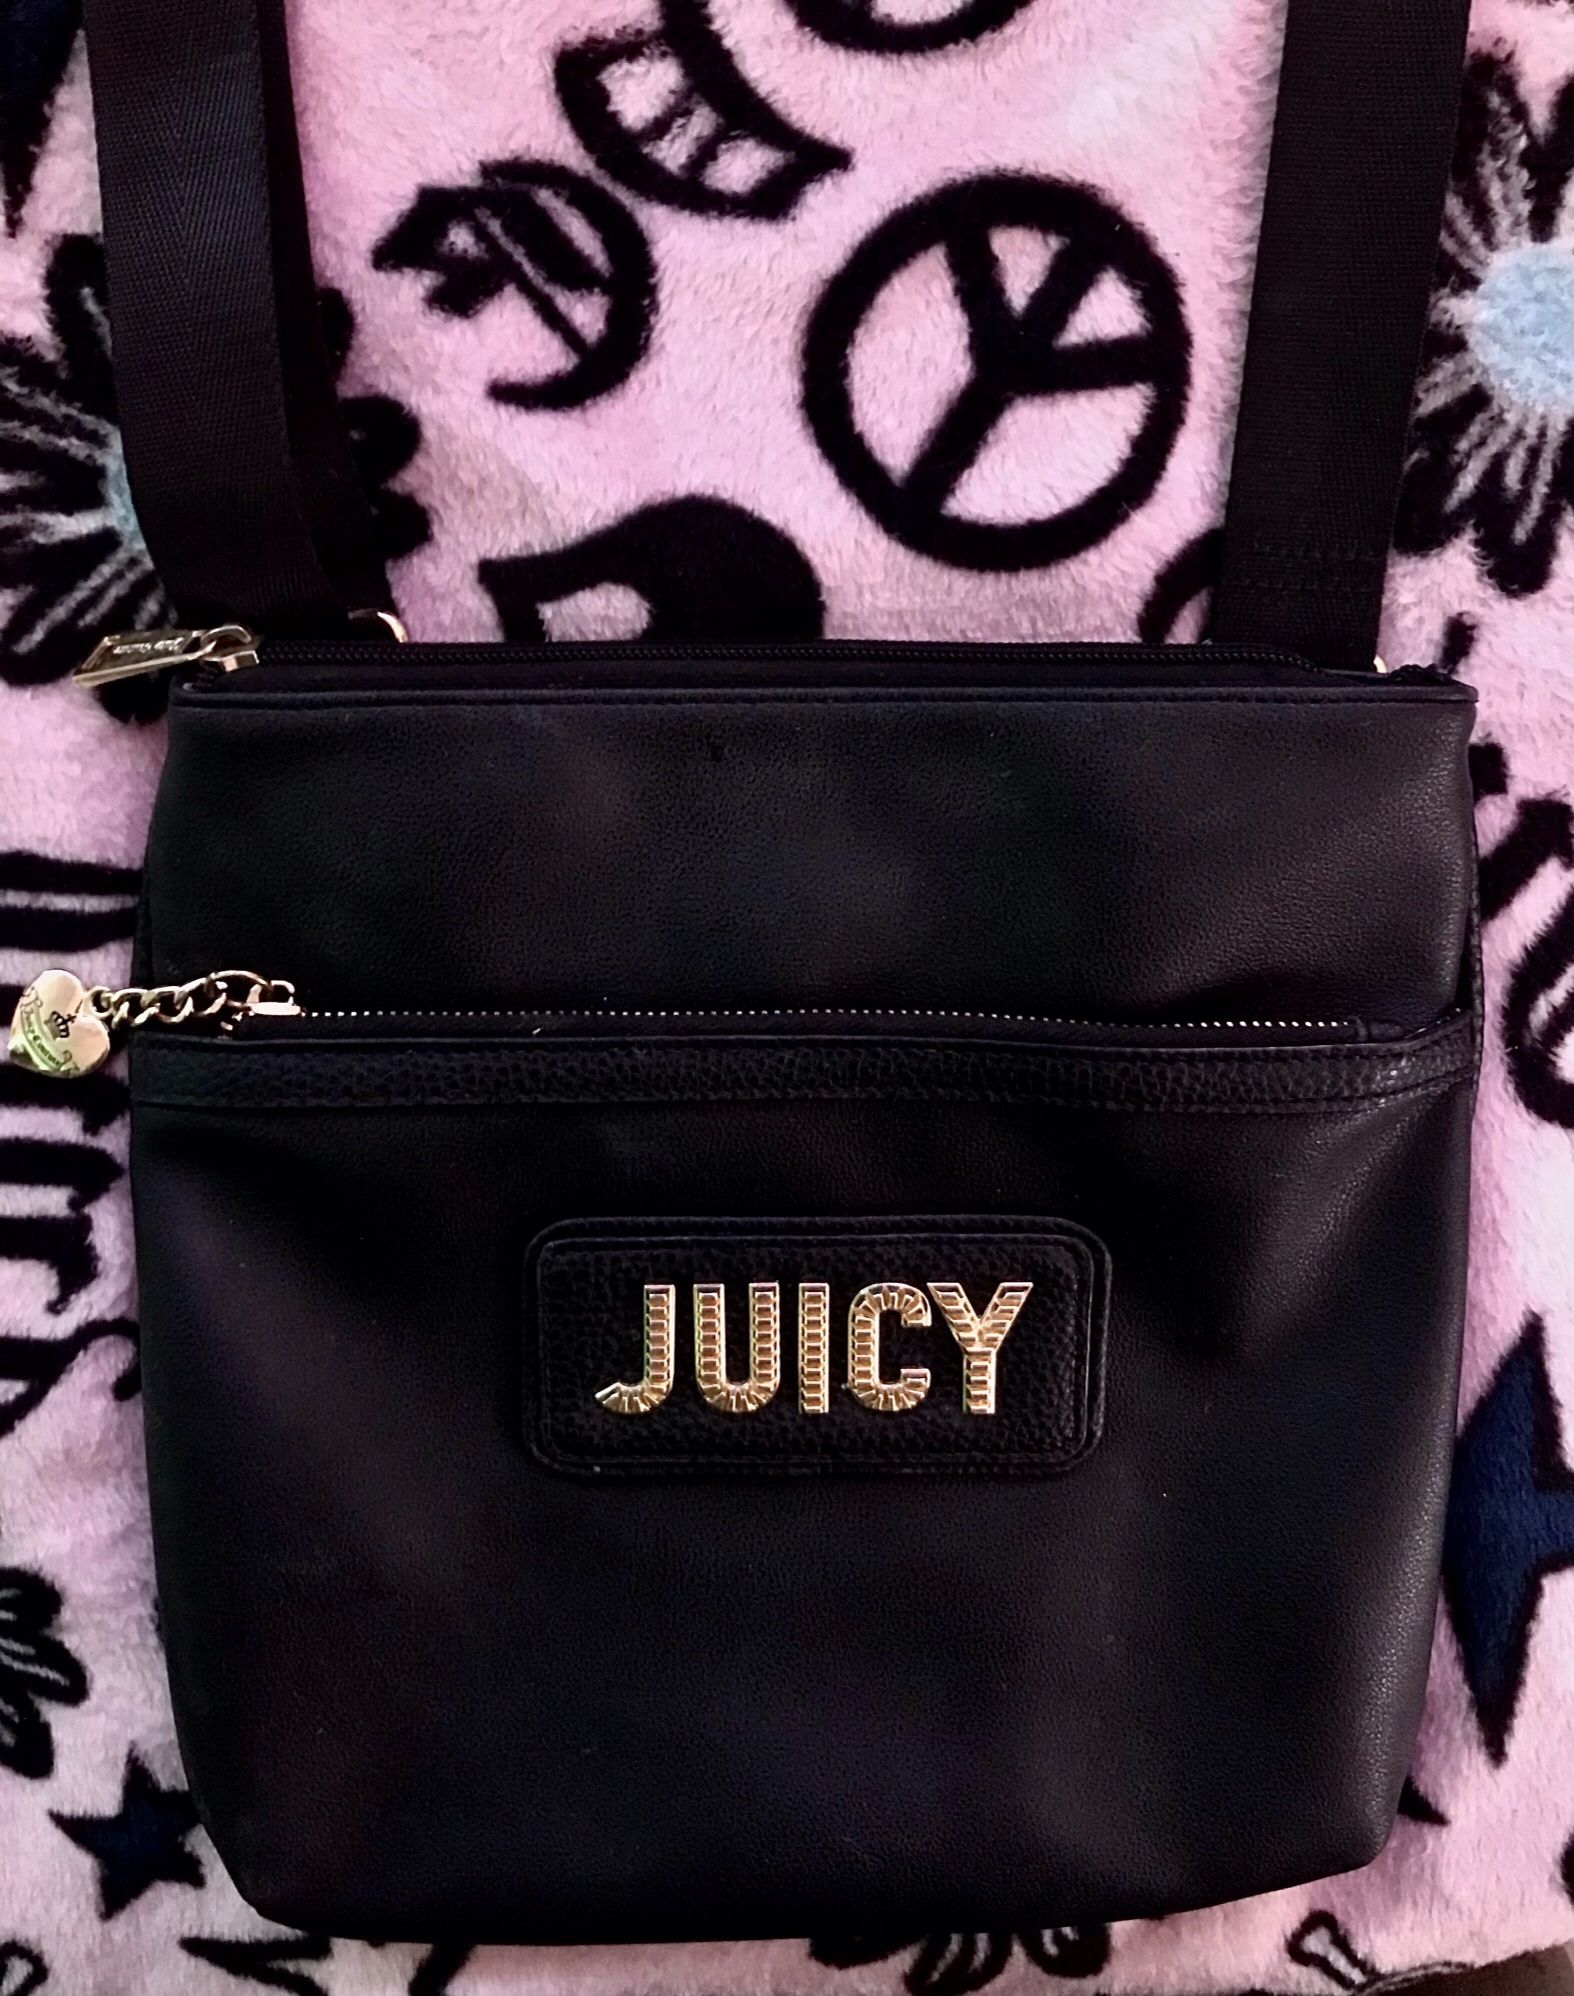 Black Juicy Couture Messenger Bag